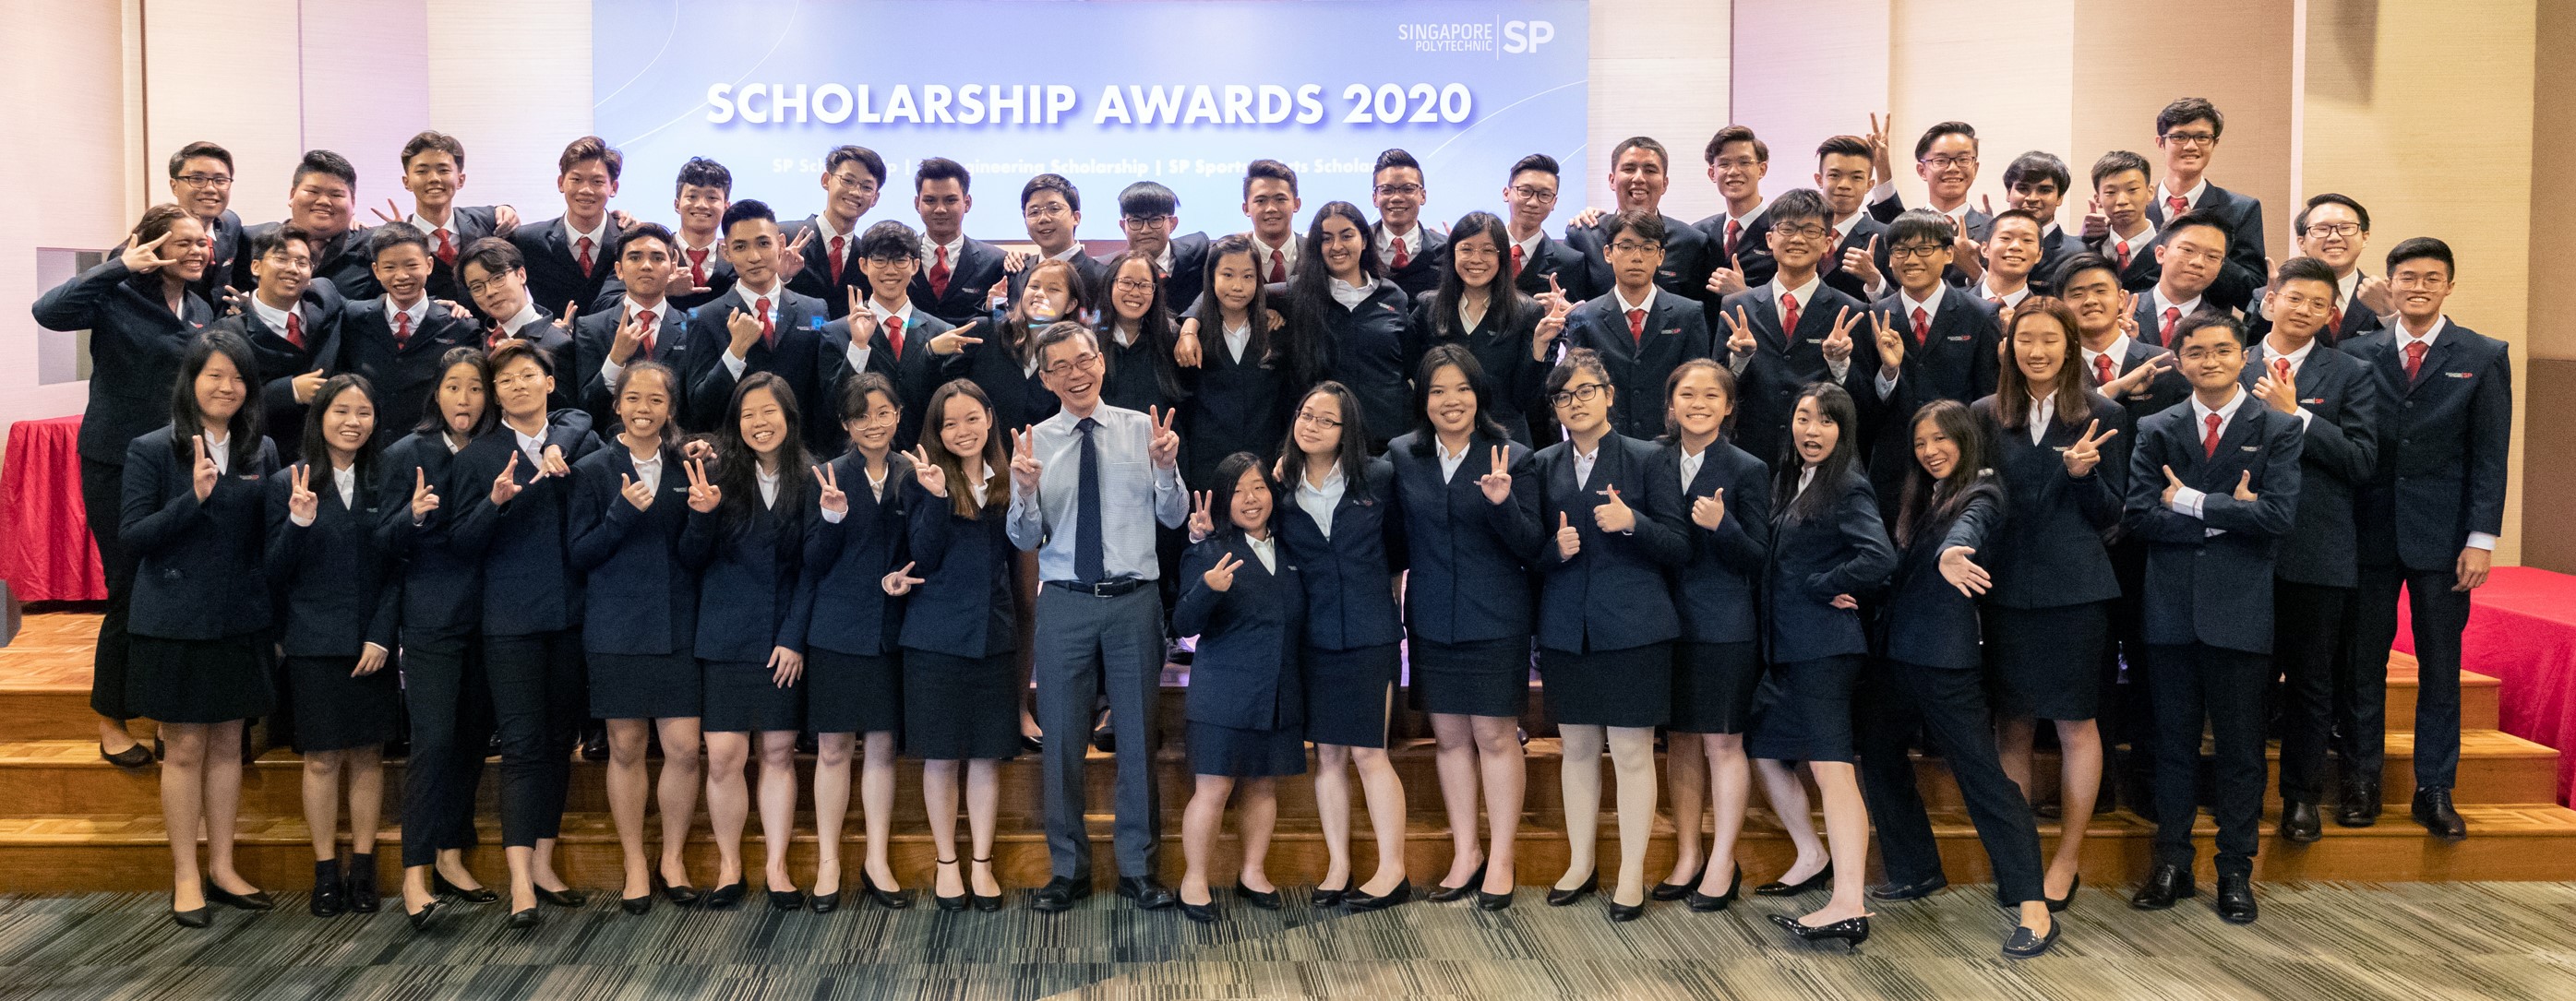 2020 SP scholarship holders